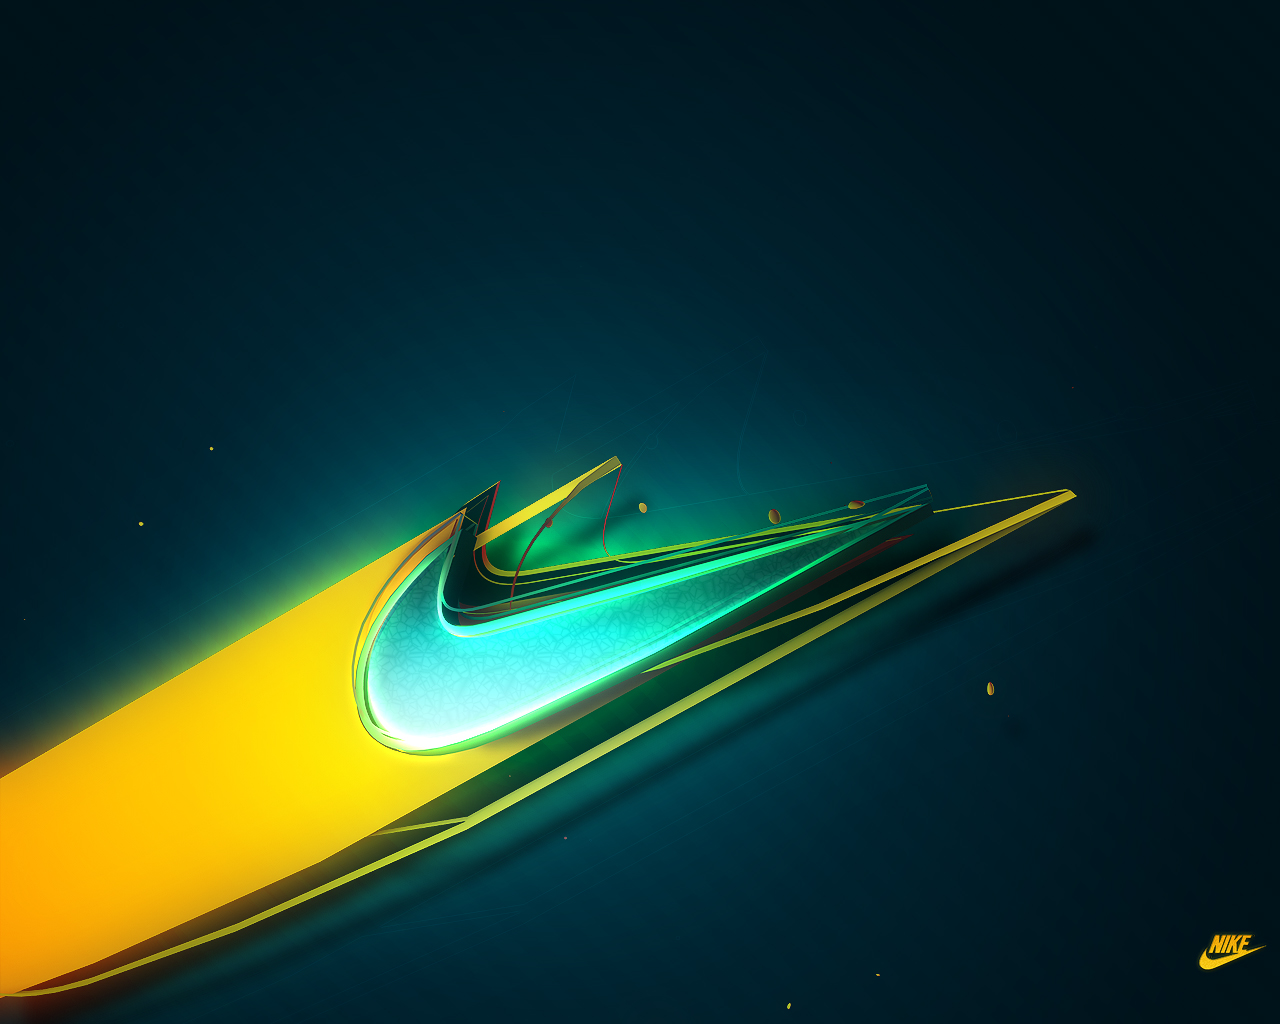 Nike Company Logo